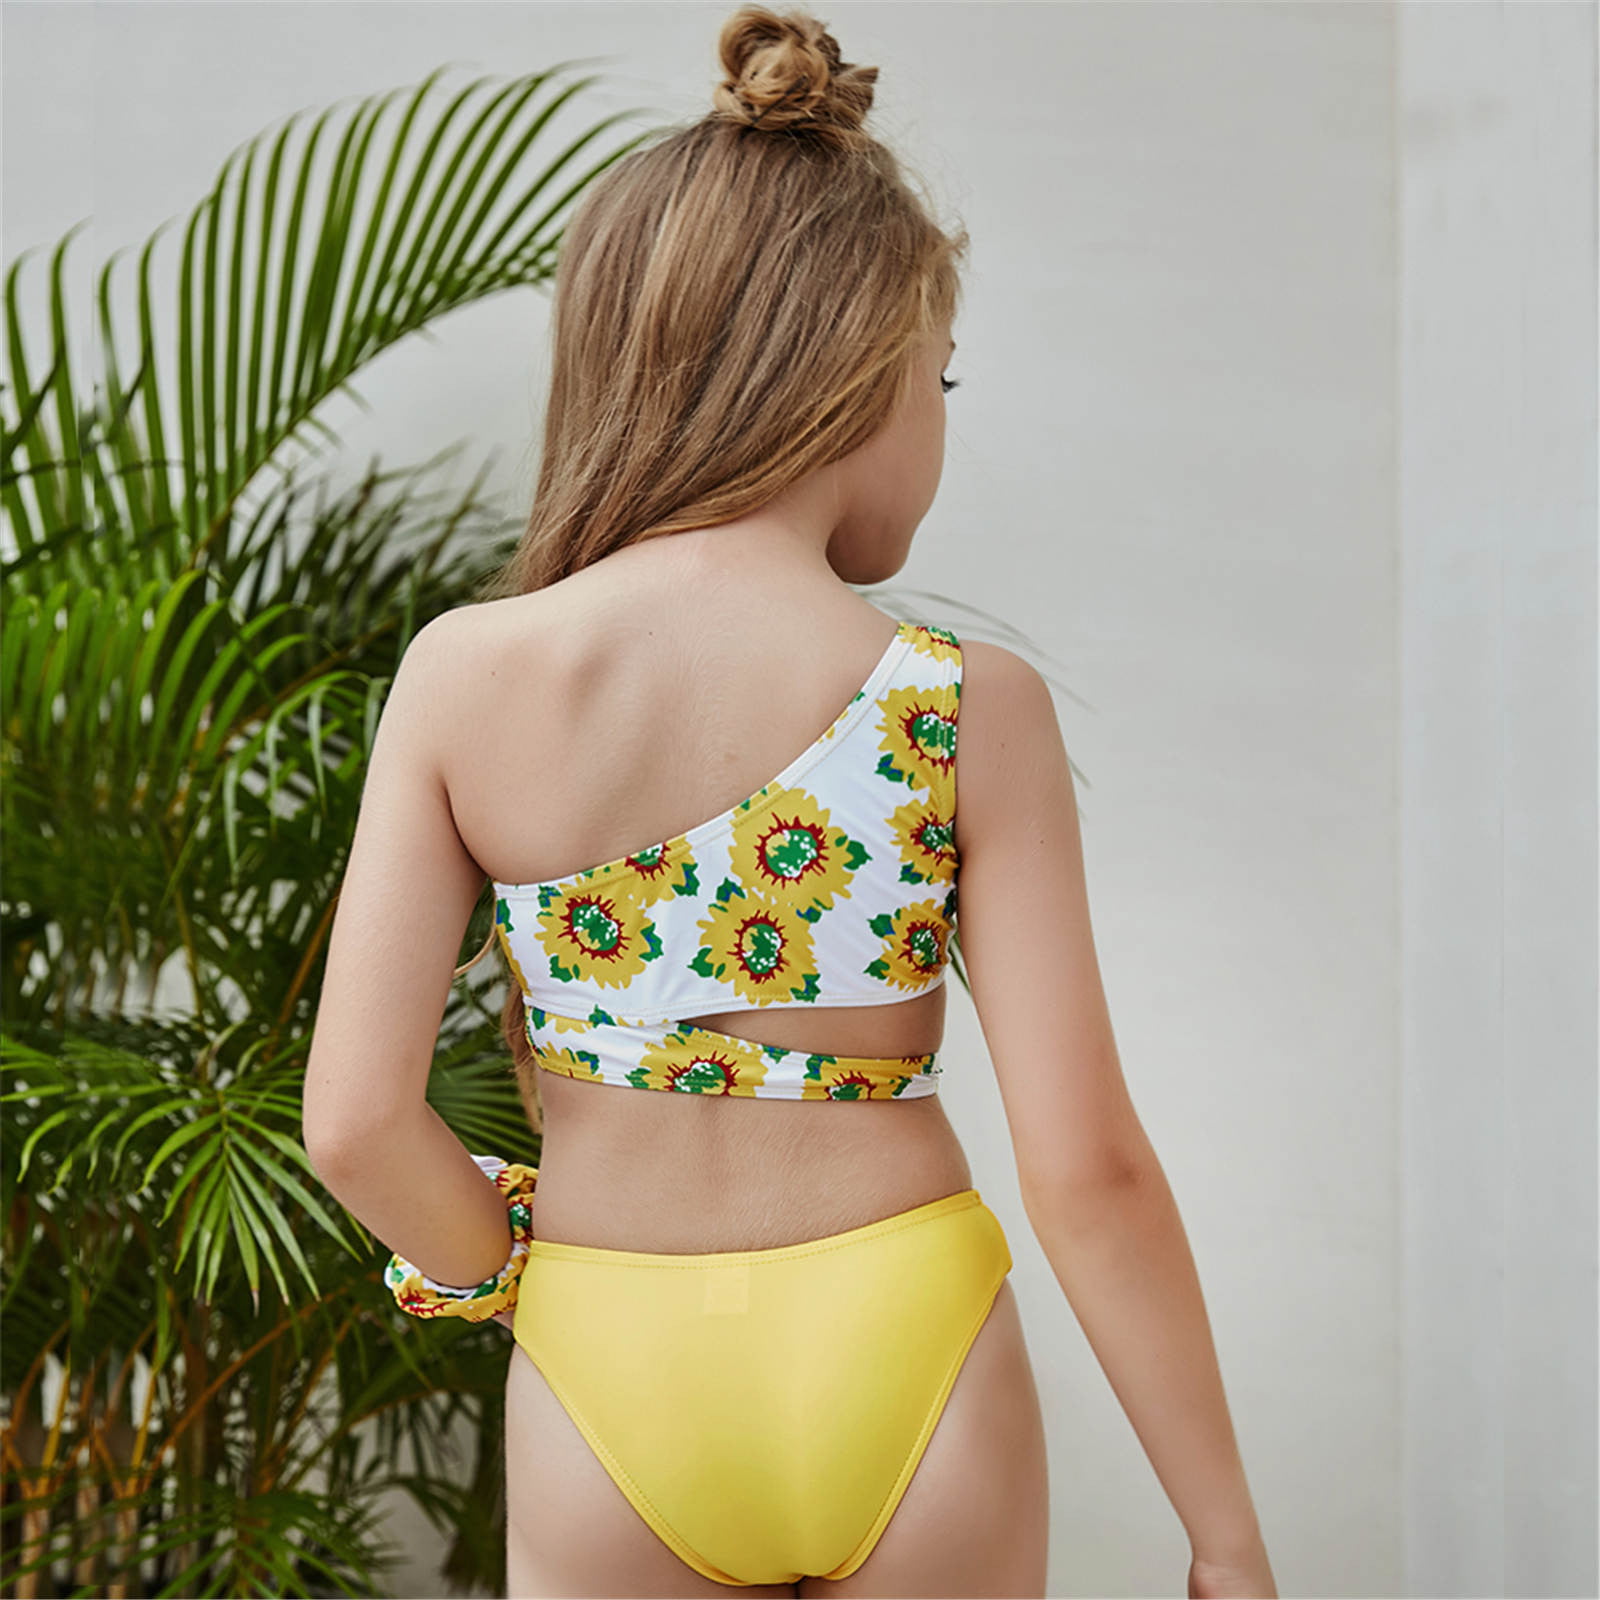 Herrnalise Girl Cute Off Shoulder SunFlower Print Bikini Two Piece